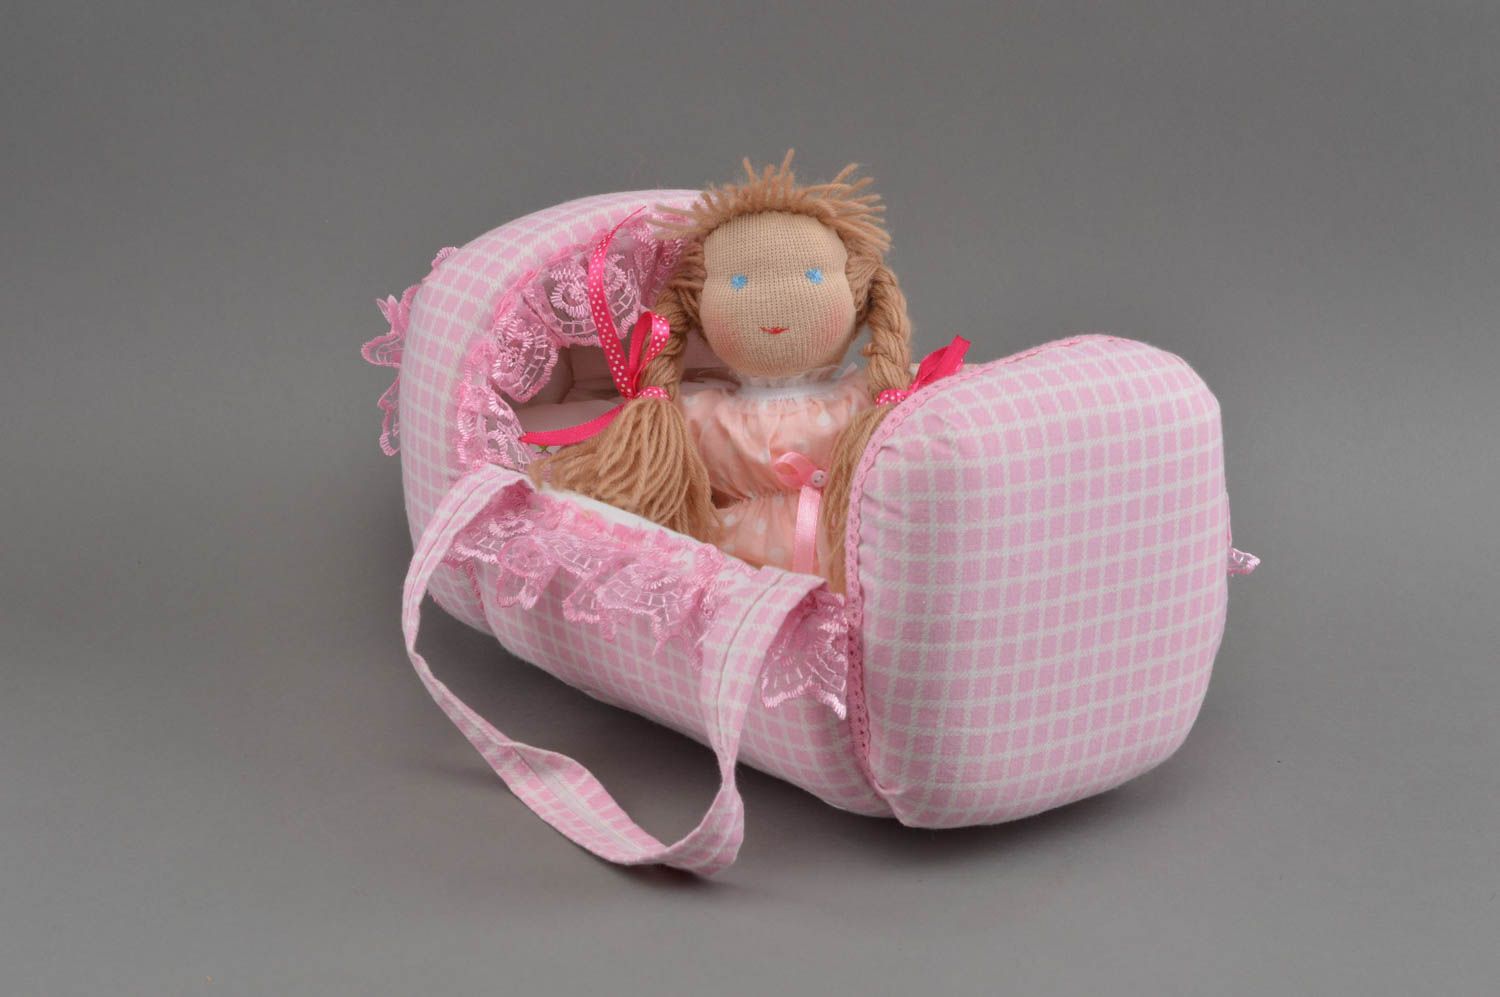 Handmade fabric toy doll in cradle stuffed toy in cradle nursery decor ideas photo 3